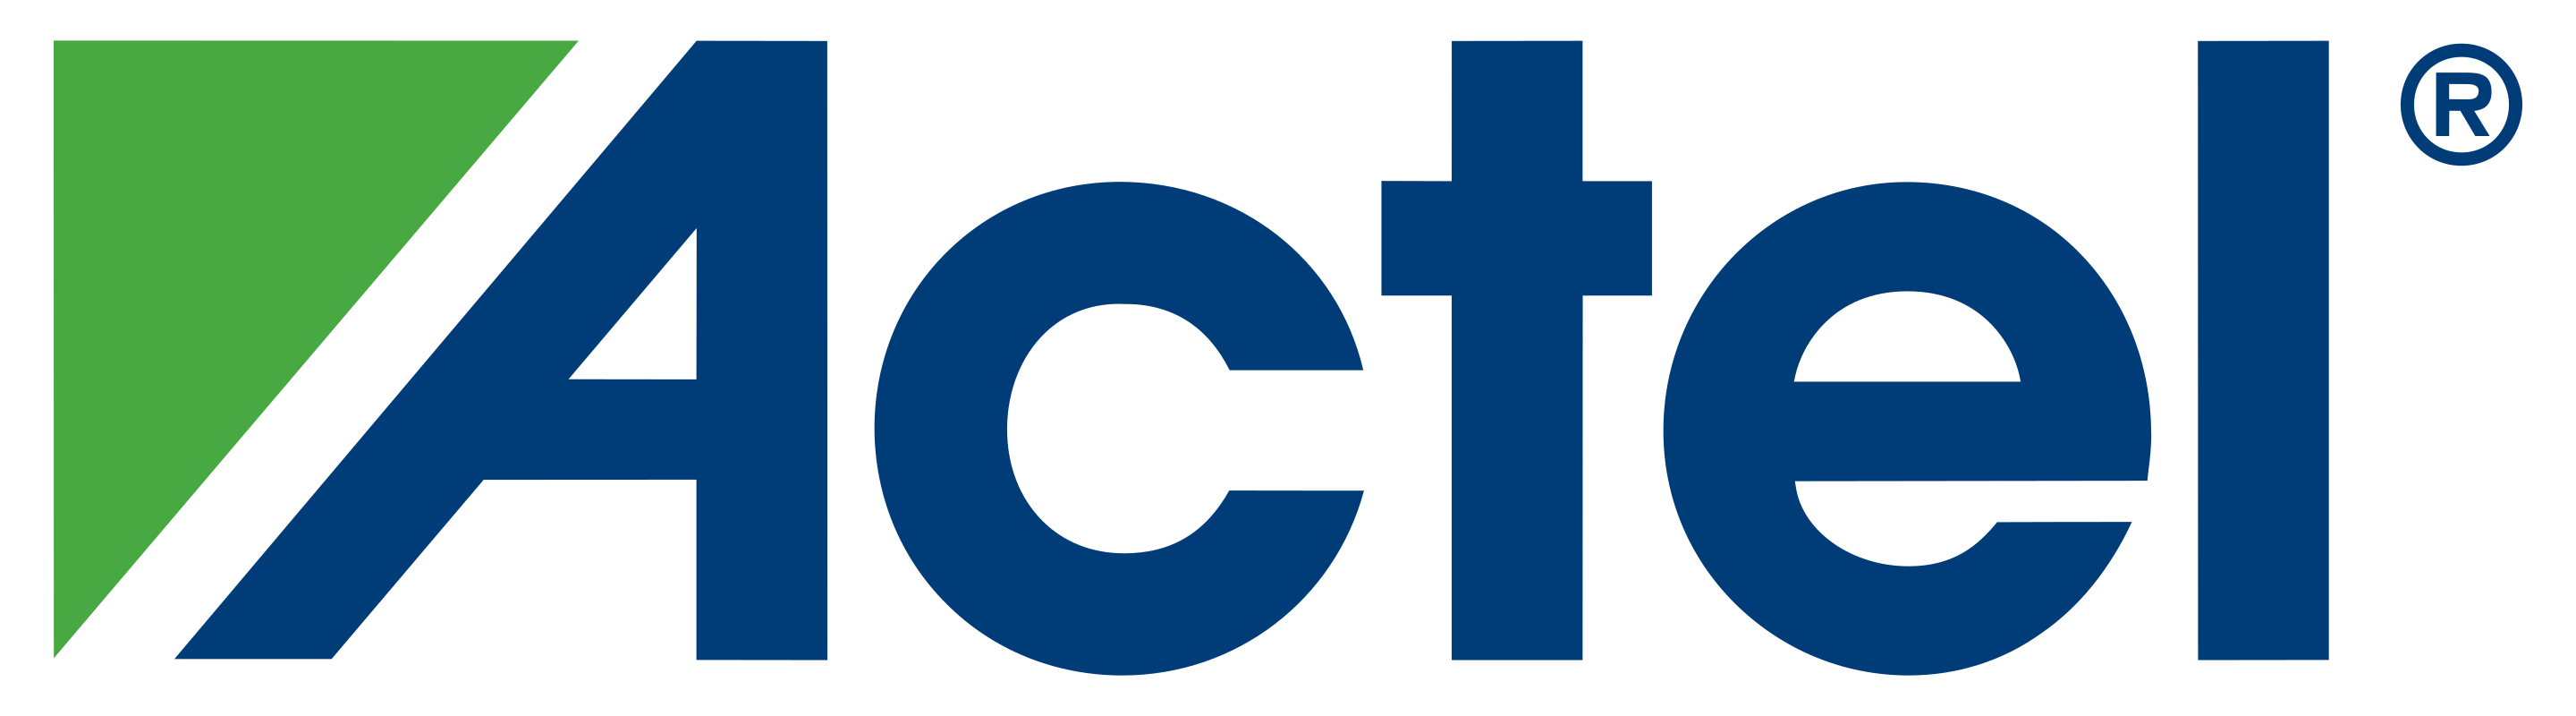 ACTEL logo